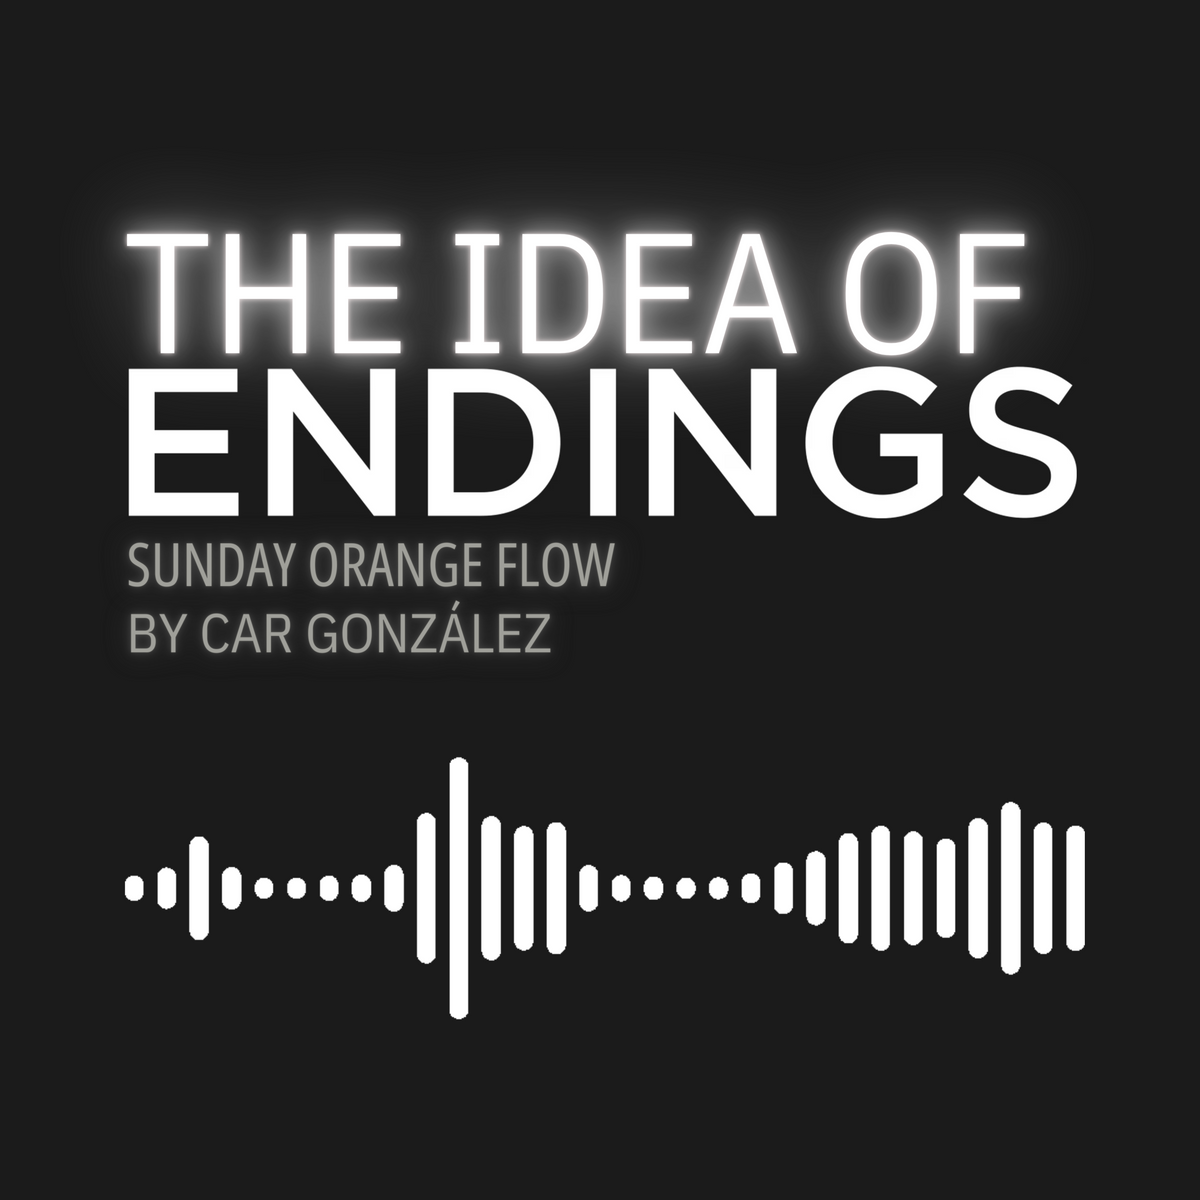 The Idea of Endings - Sunday Orange Flow